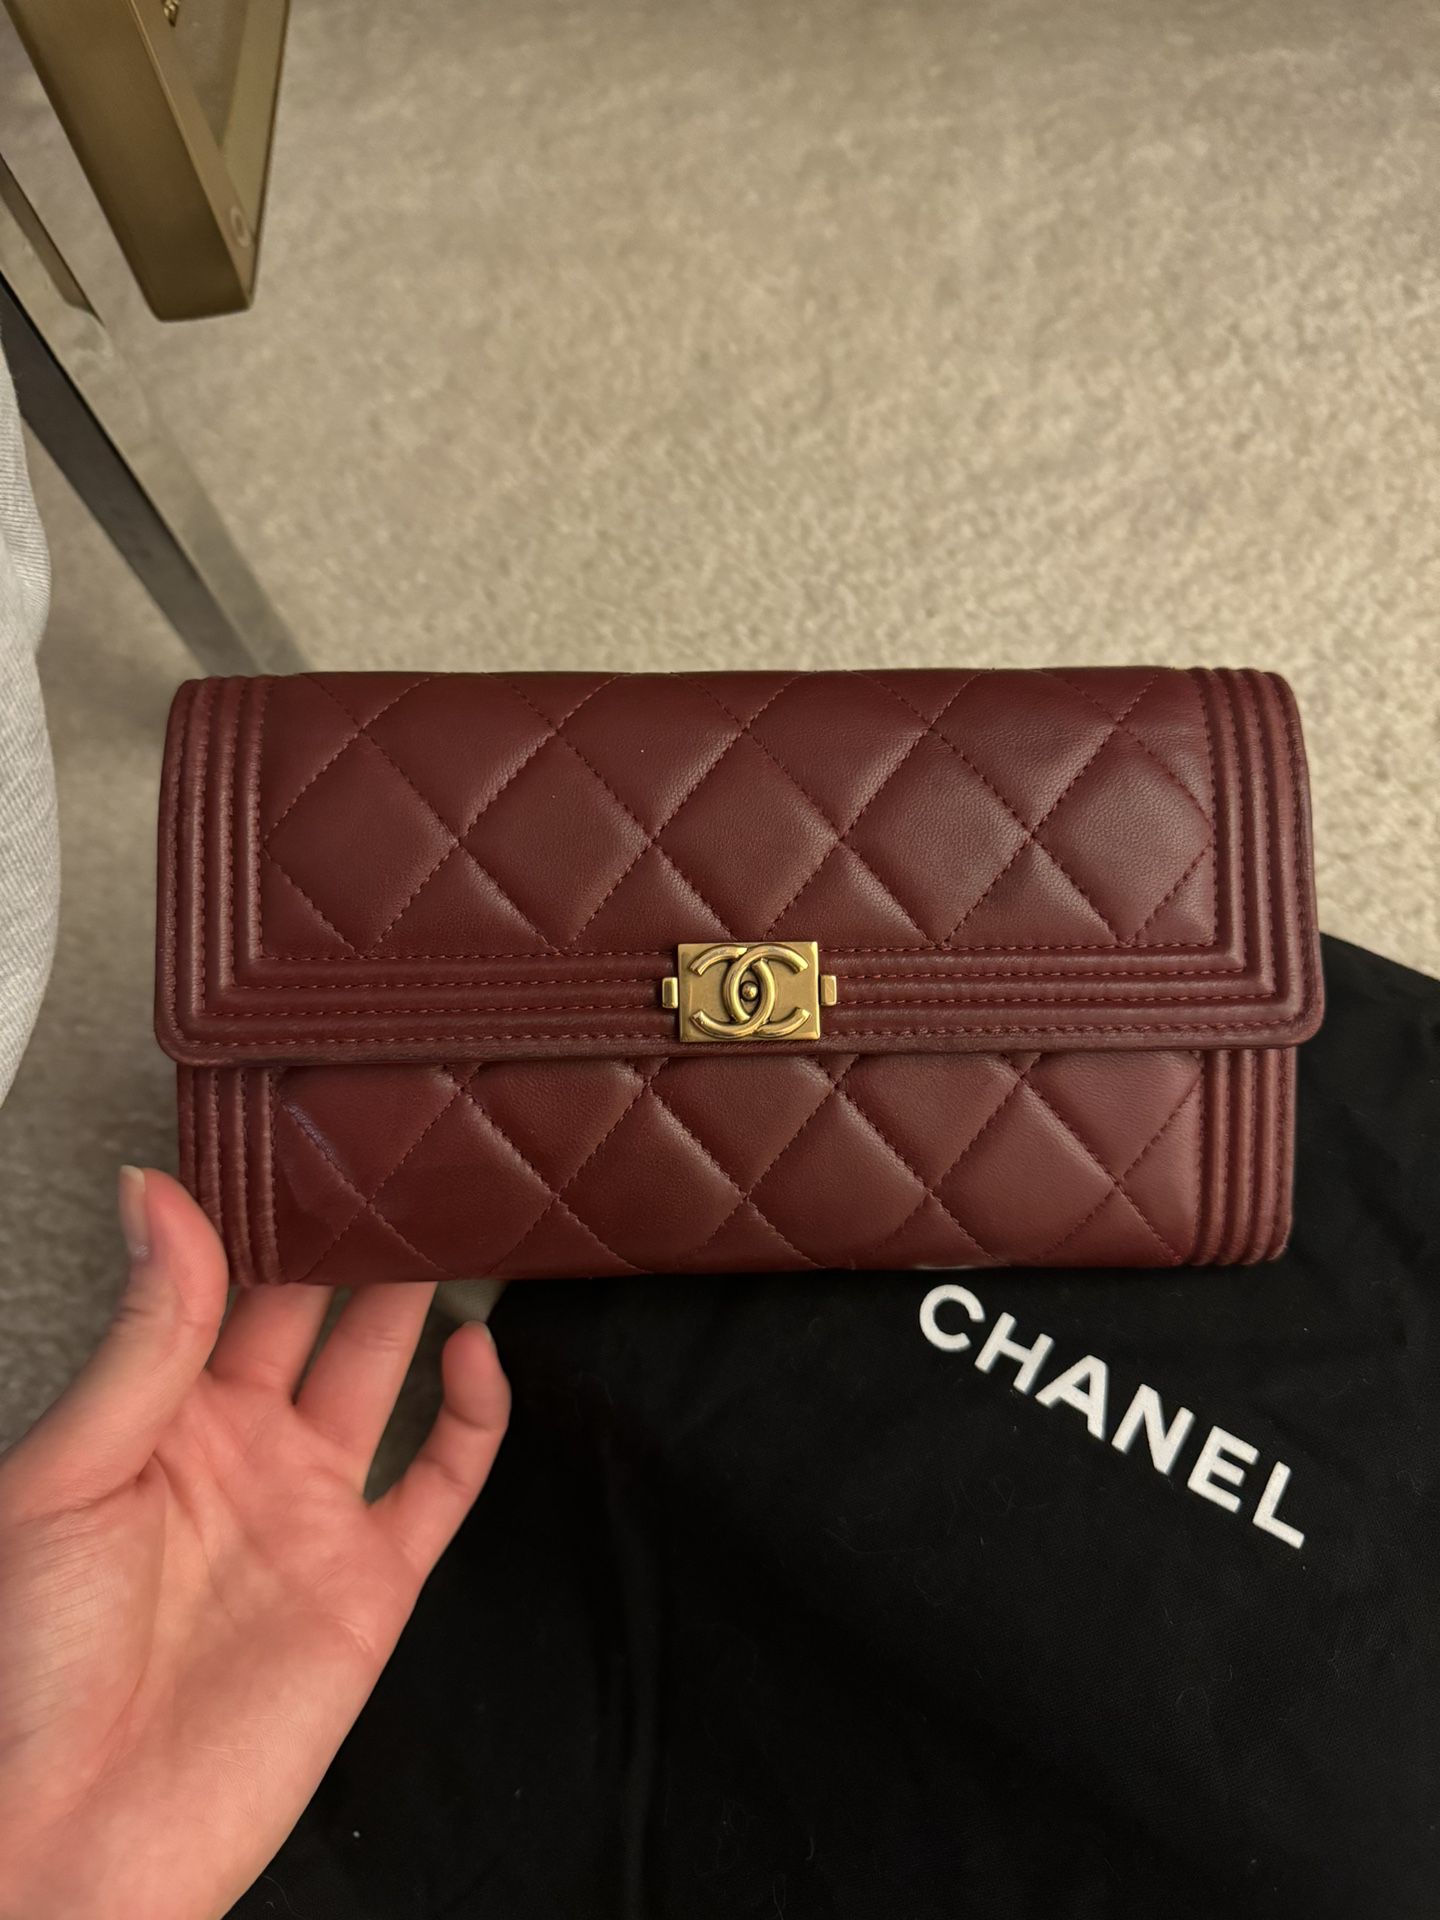 Chanel boy wallet wine red color